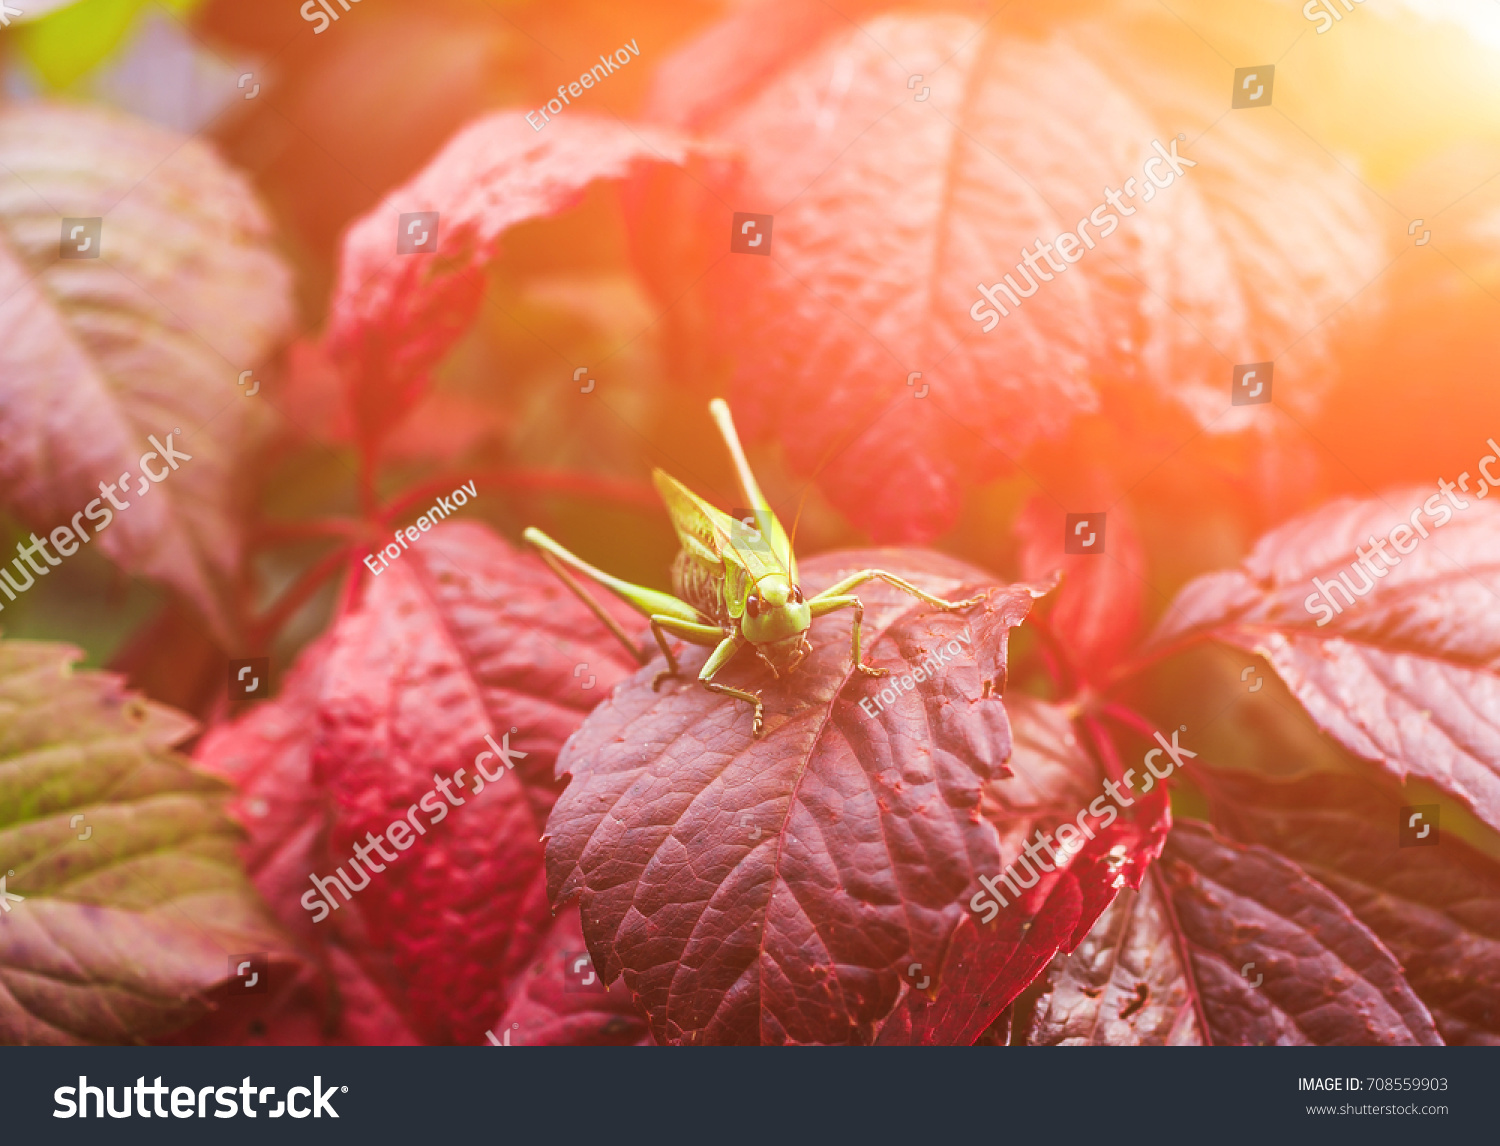 Green grasshopper sitting on a grape leaf on blurred background garden. #708559903